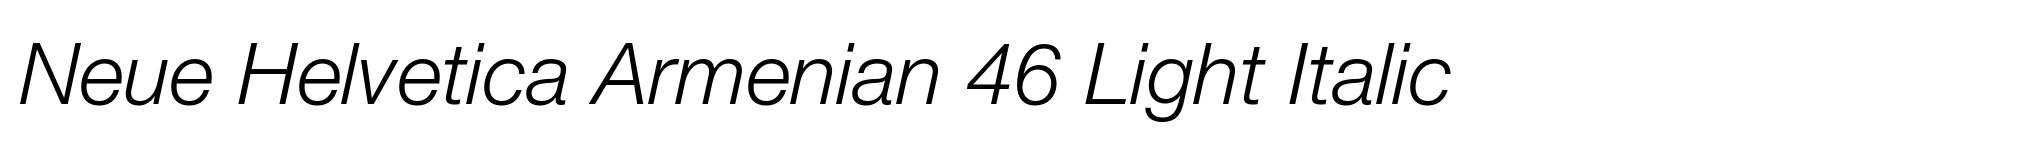 Neue Helvetica Armenian 46 Light Italic image